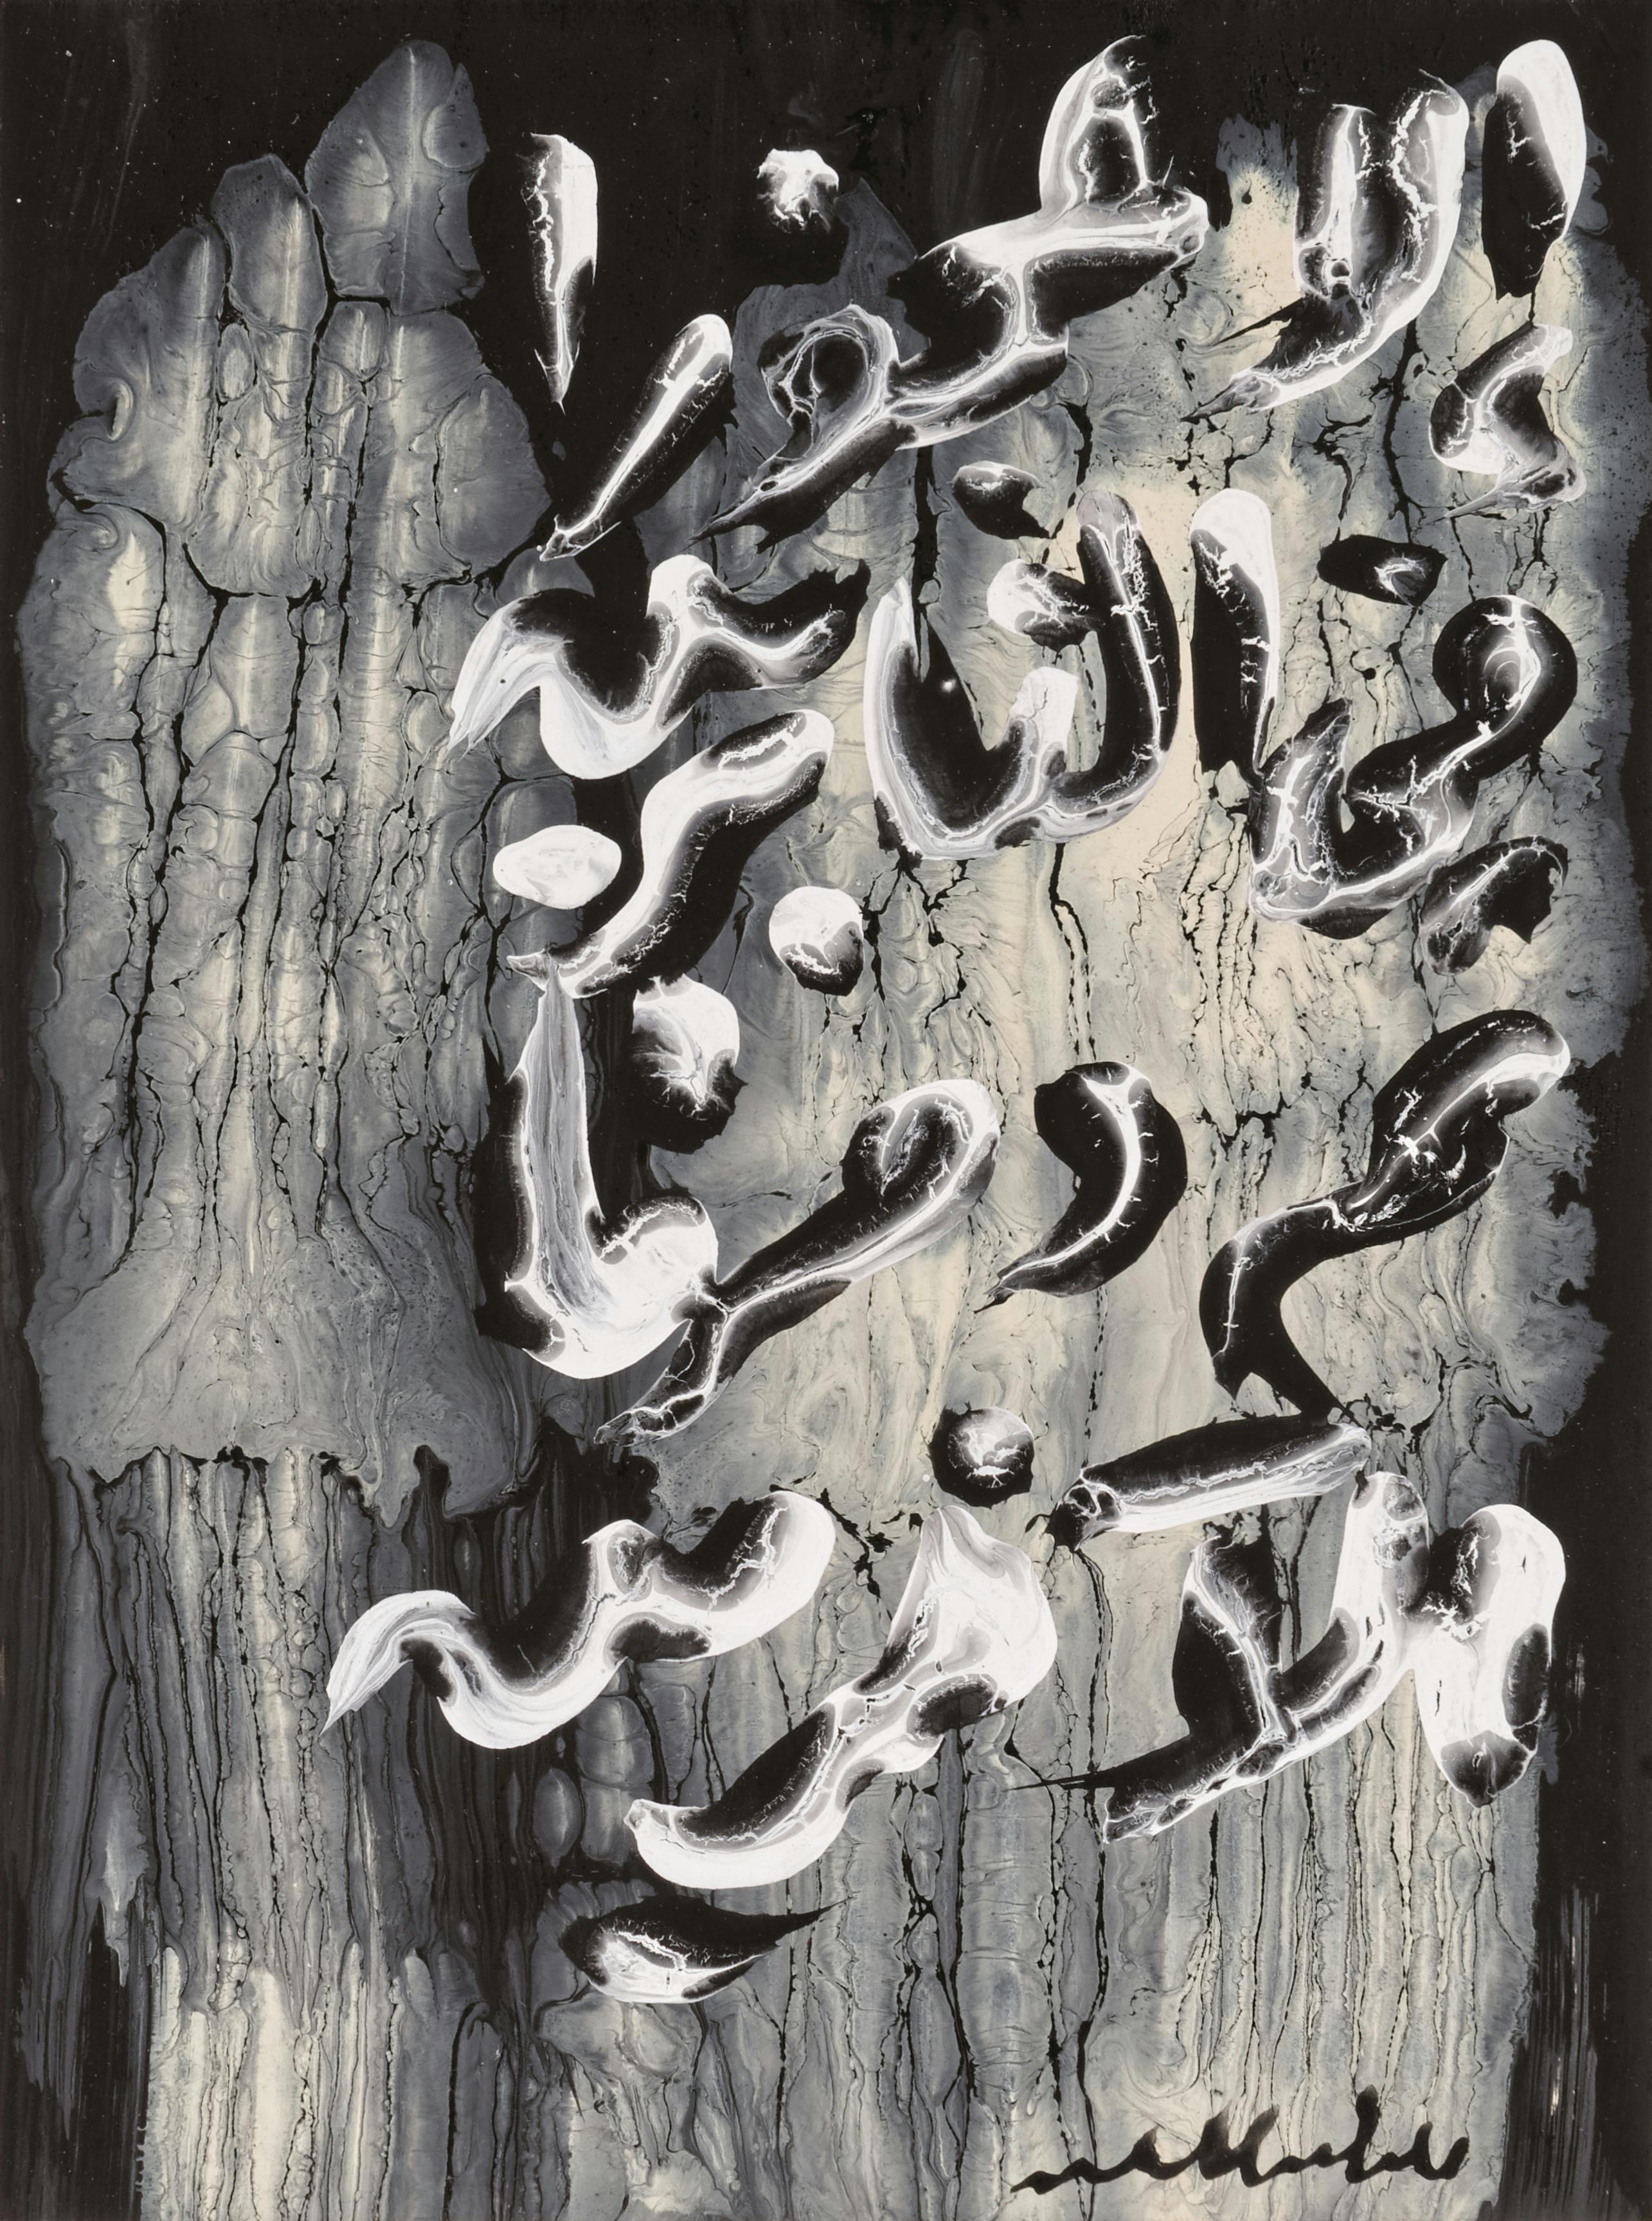 Hamed Abdalla, Gens des cavernes, 1975–1976, Acryl auf Papier, 39,8 x 29,7 cm, Artist estate, Foto: Faouzi Massrali, © Artist estate